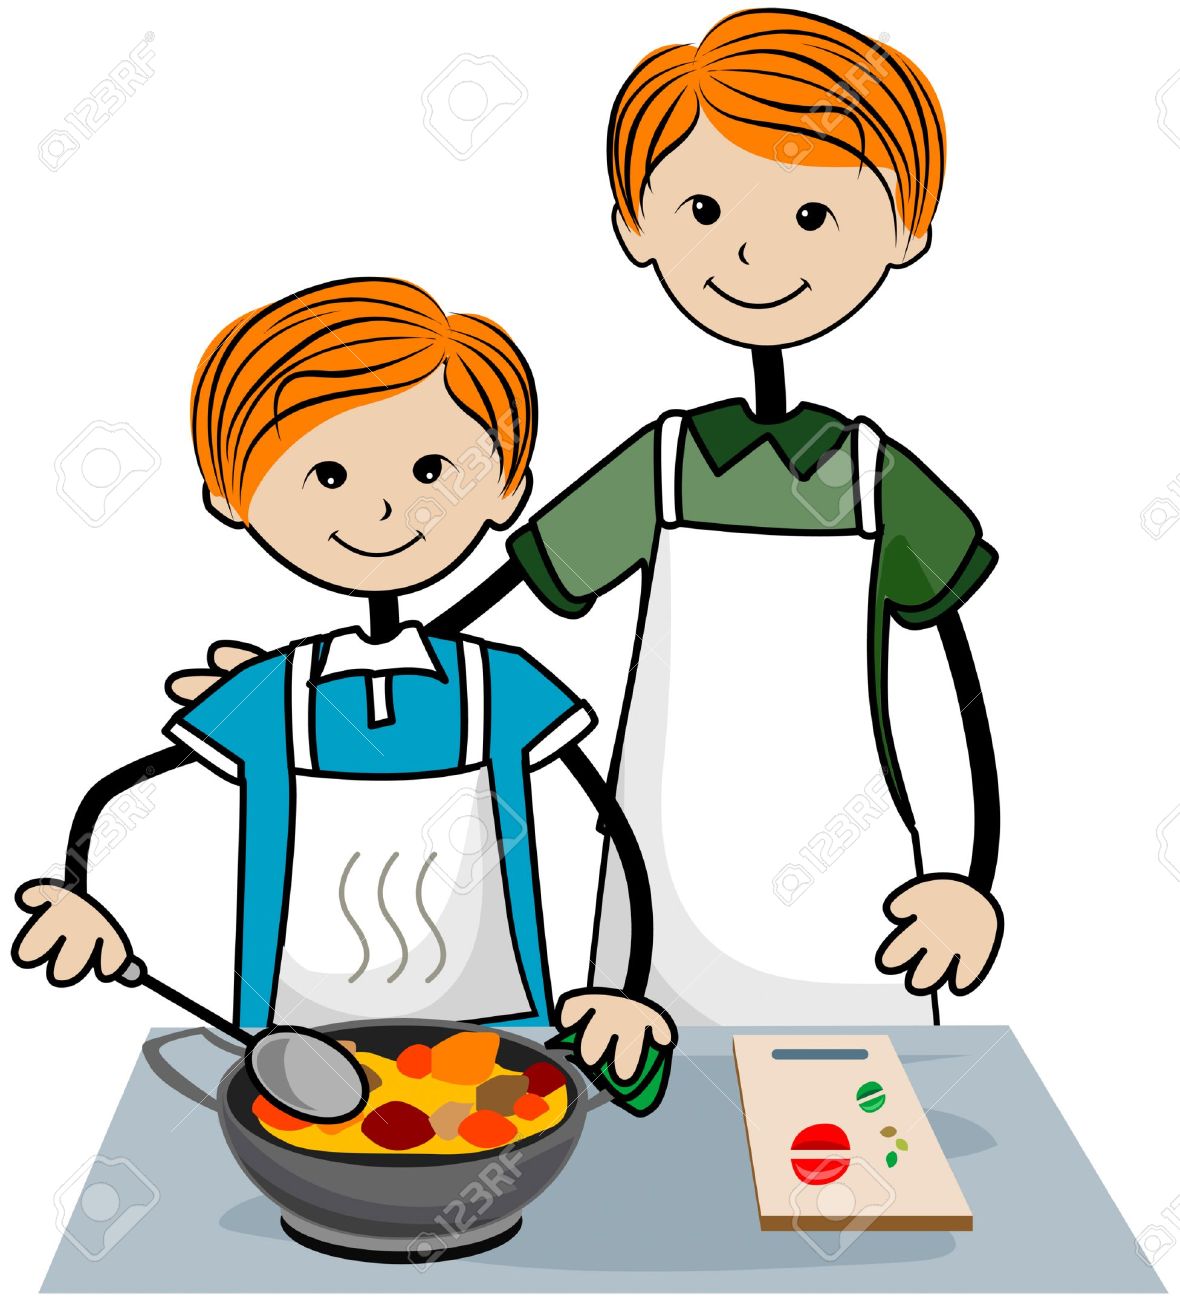 Children cooking clipart.